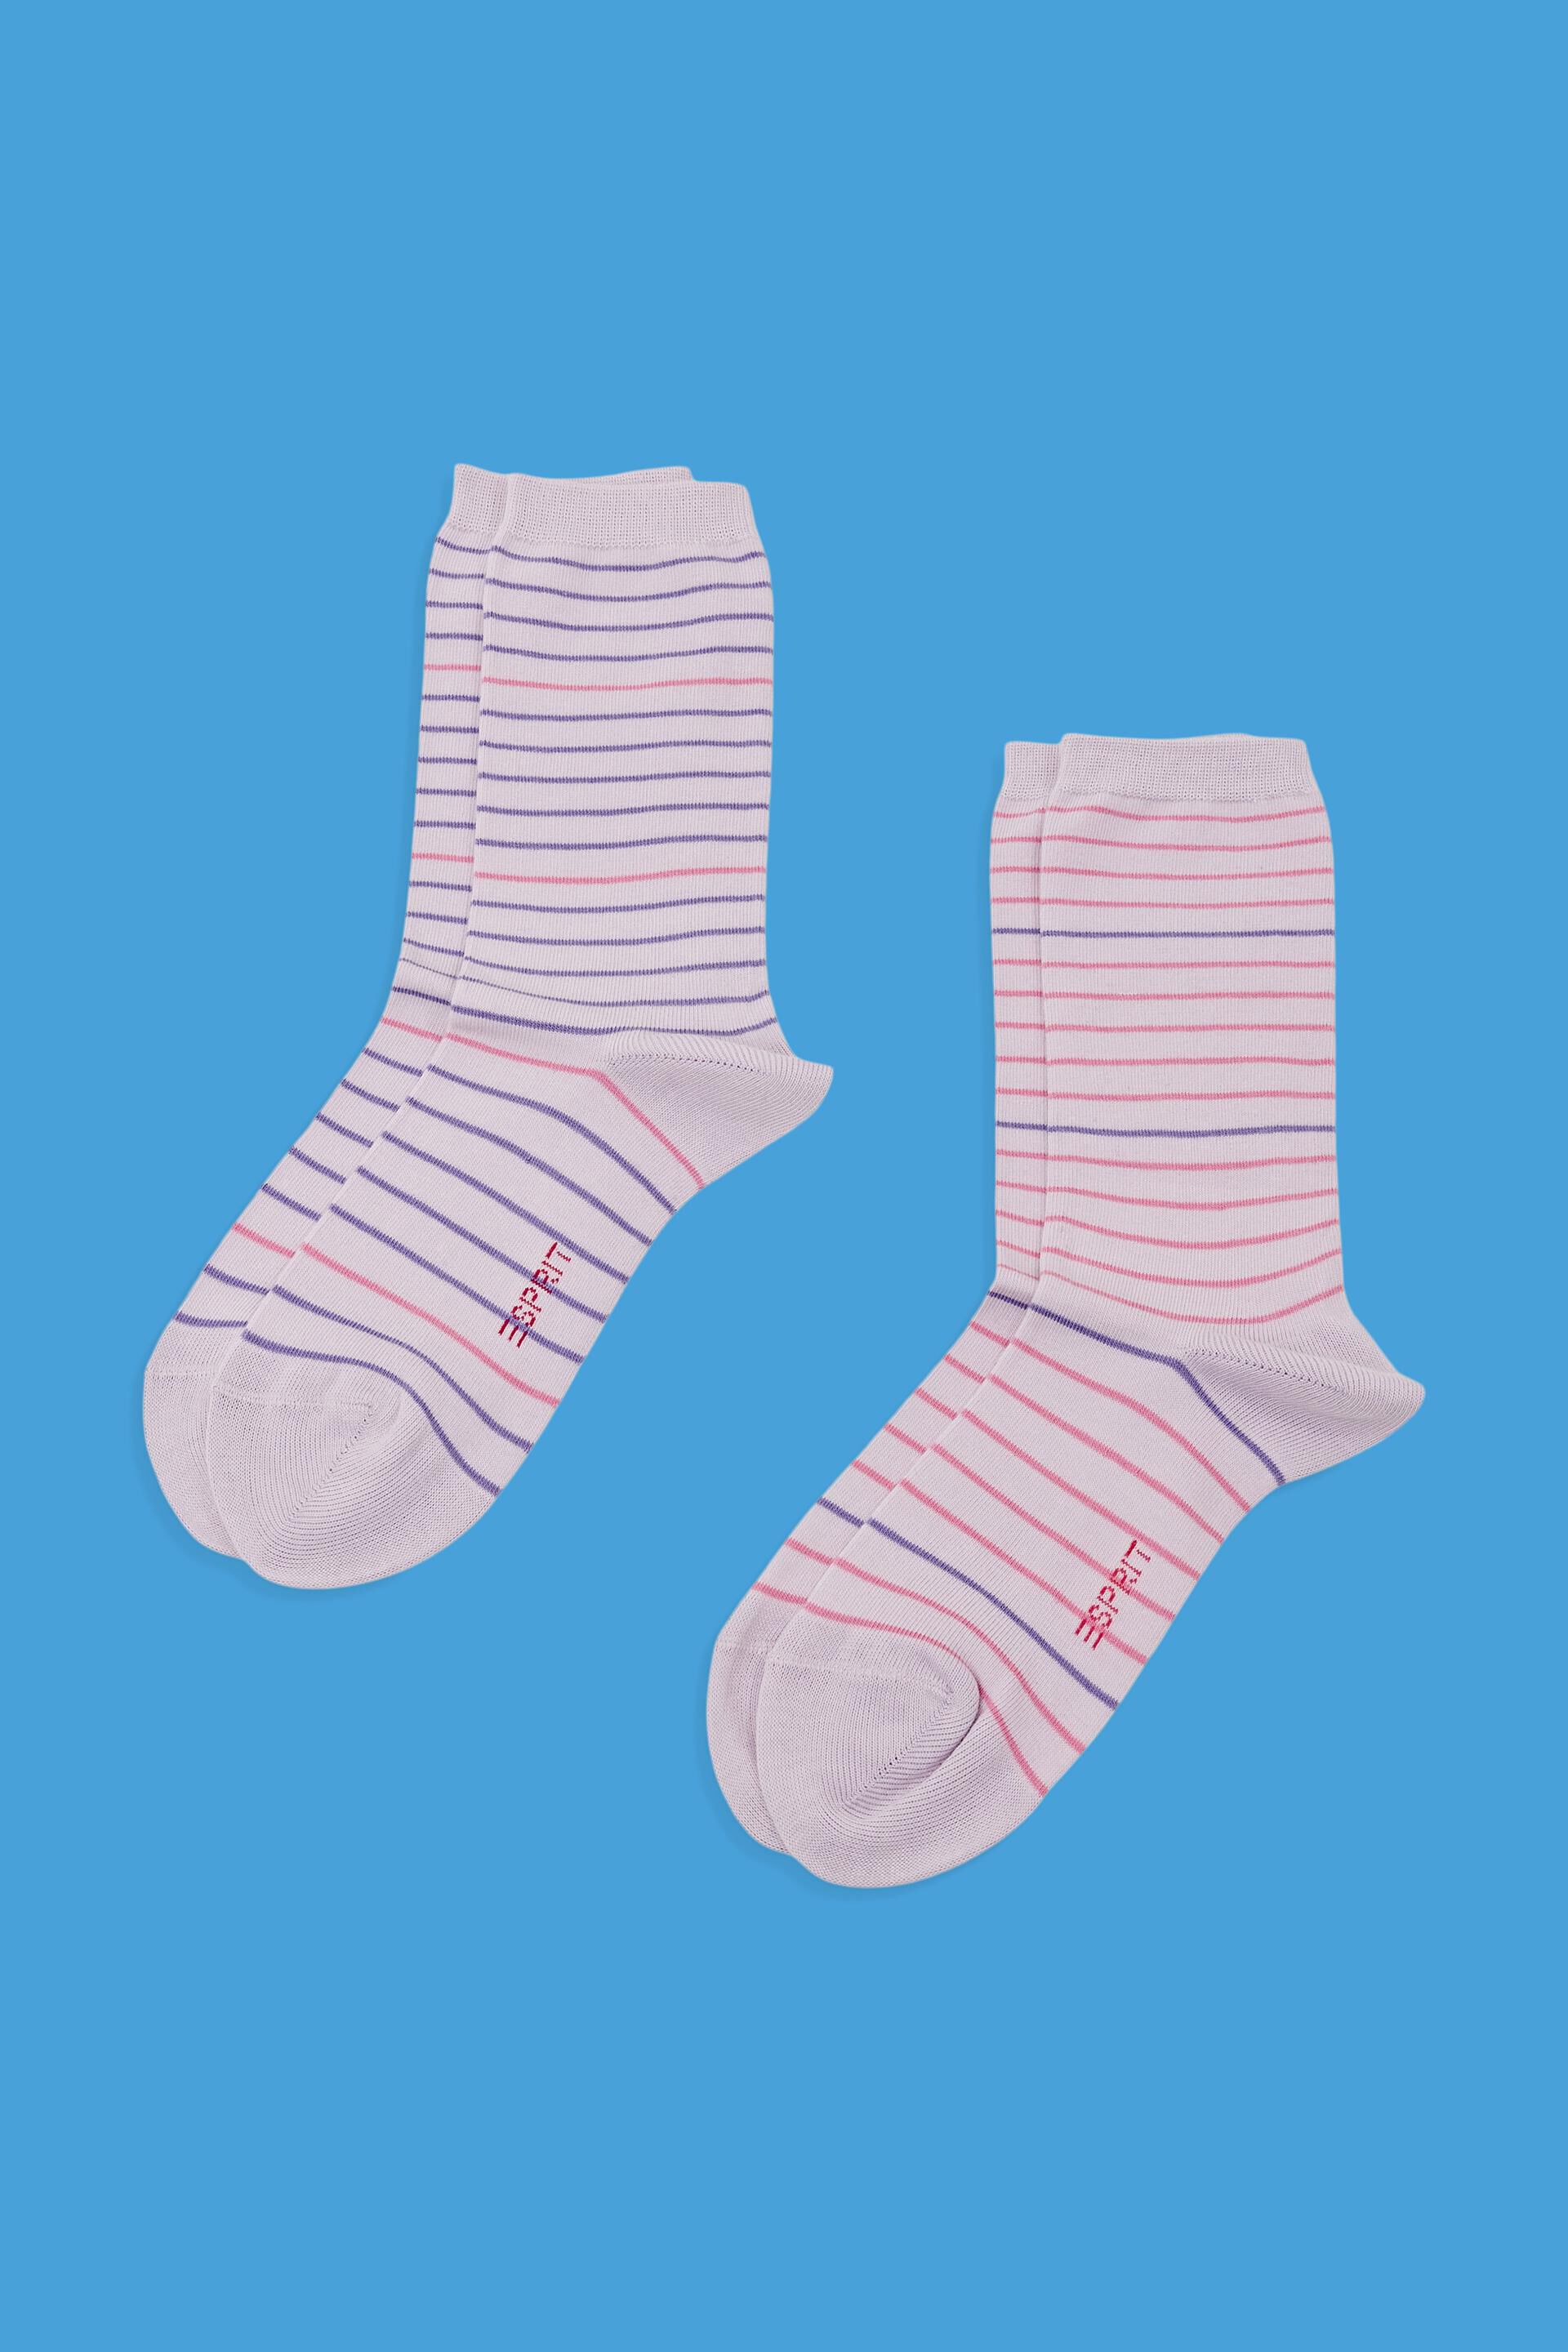 Esprit of socks, organic 2-pack cotton striped